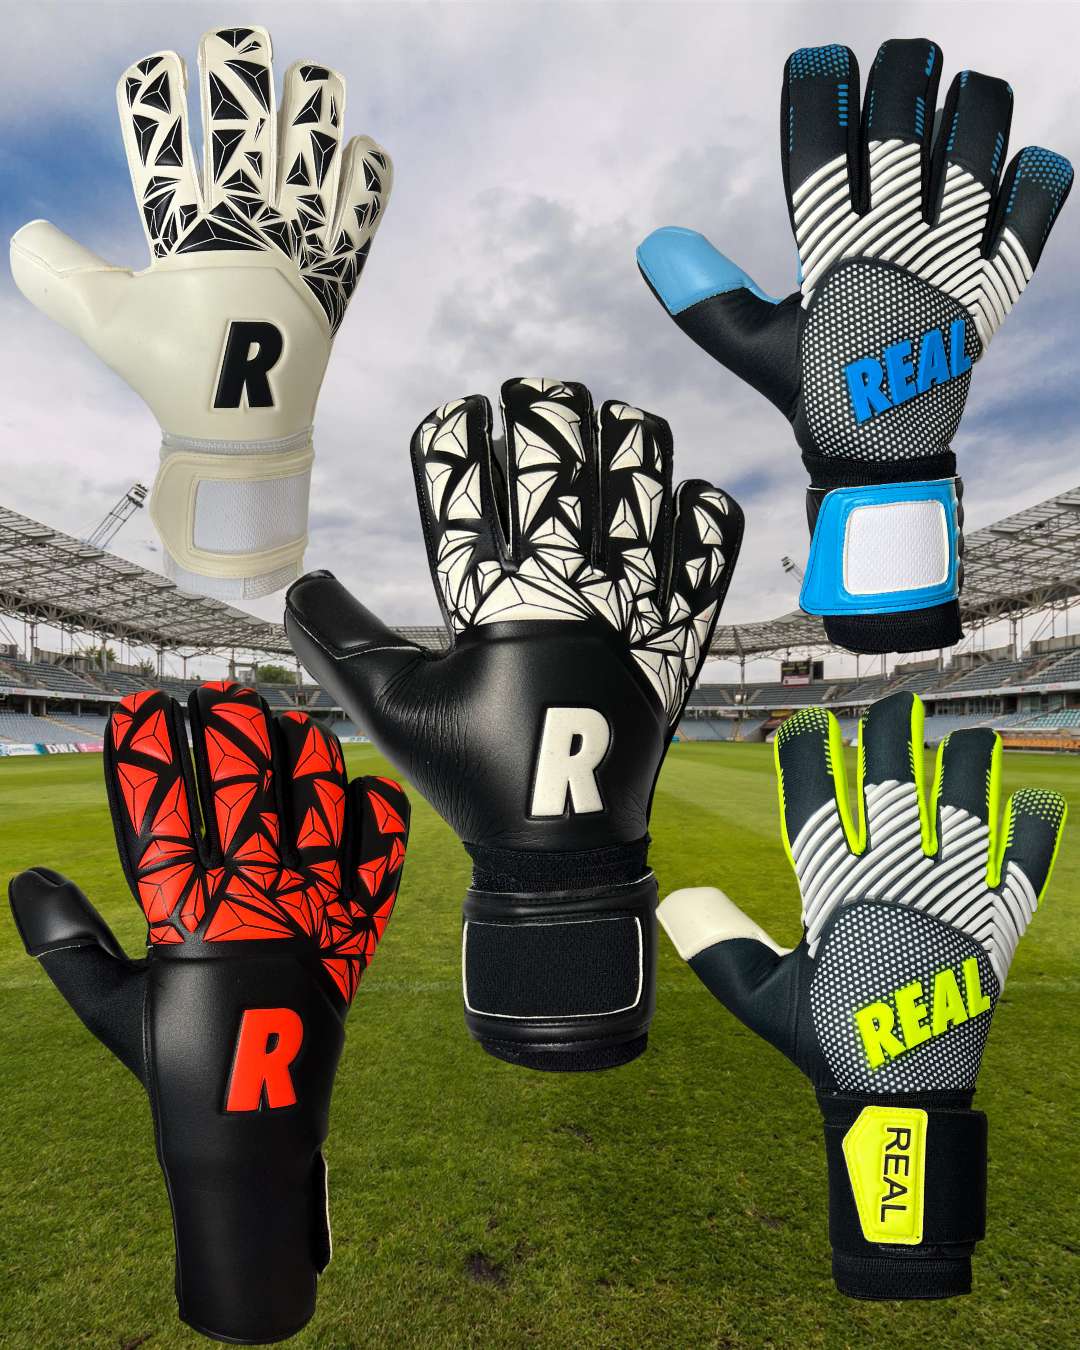 glovelgu and REAL goalkeeper gloves